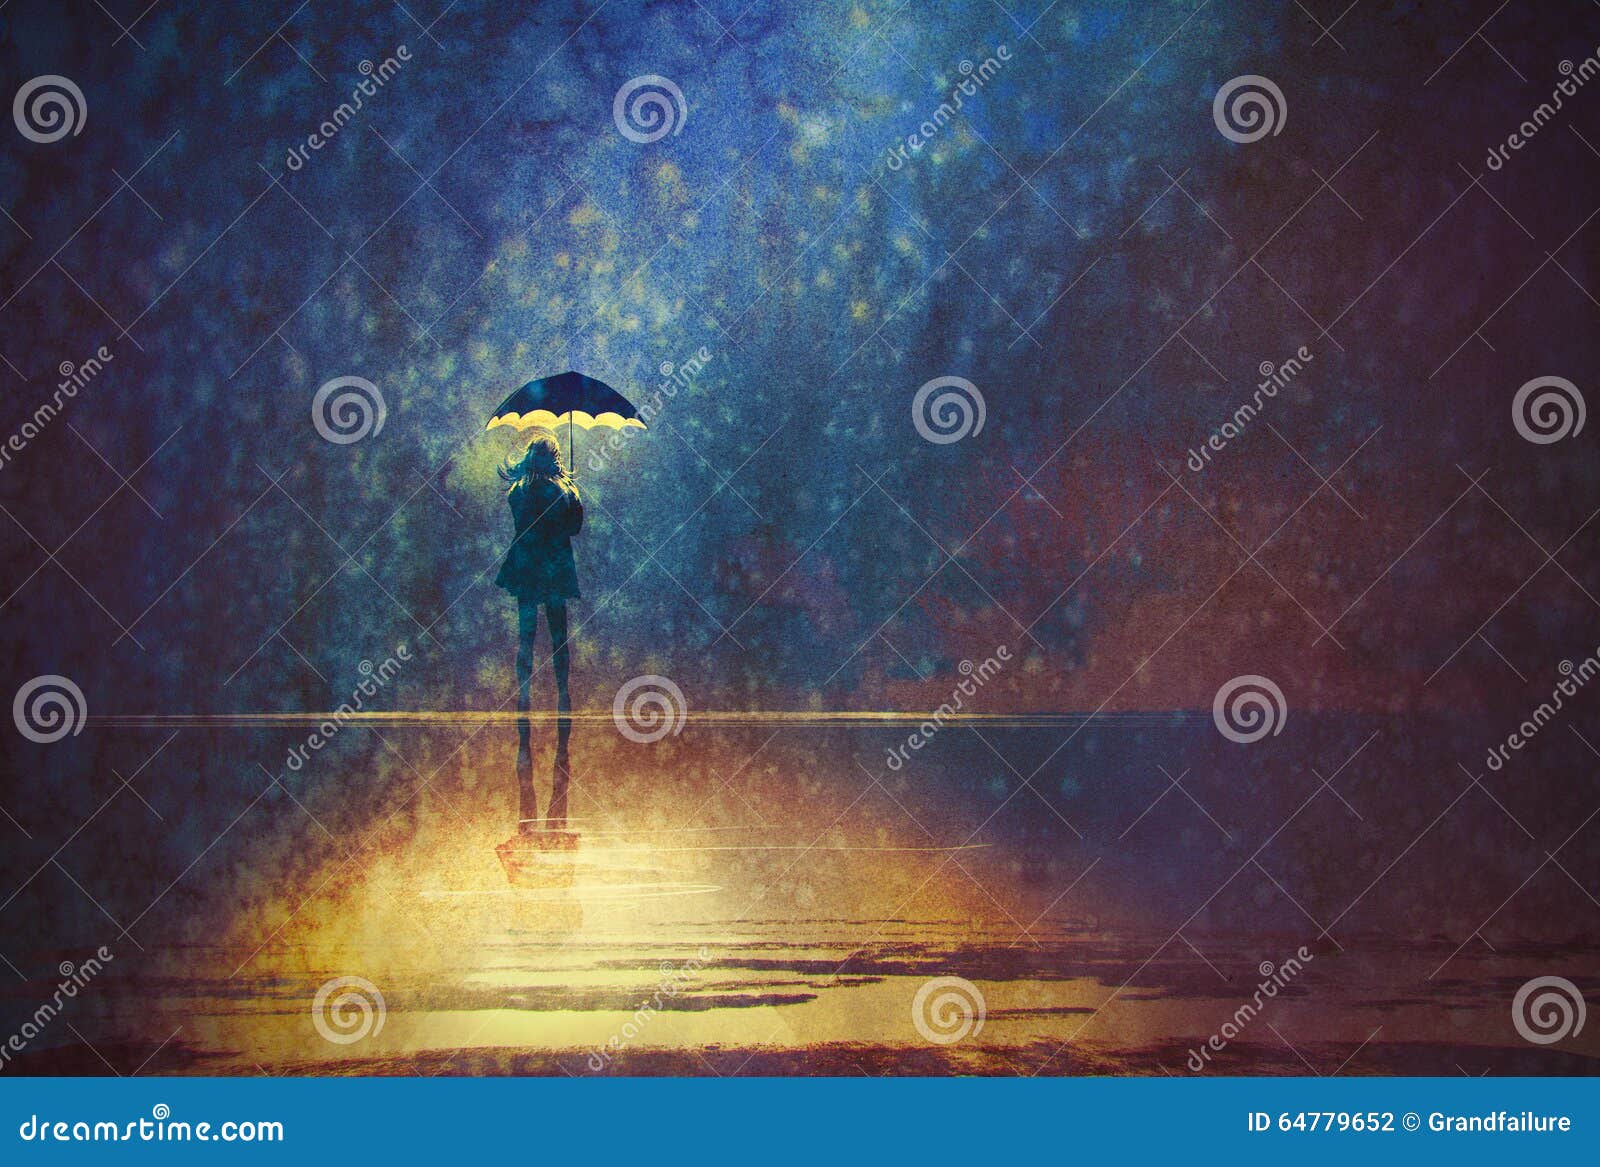 lonely woman under umbrella lights in the dark